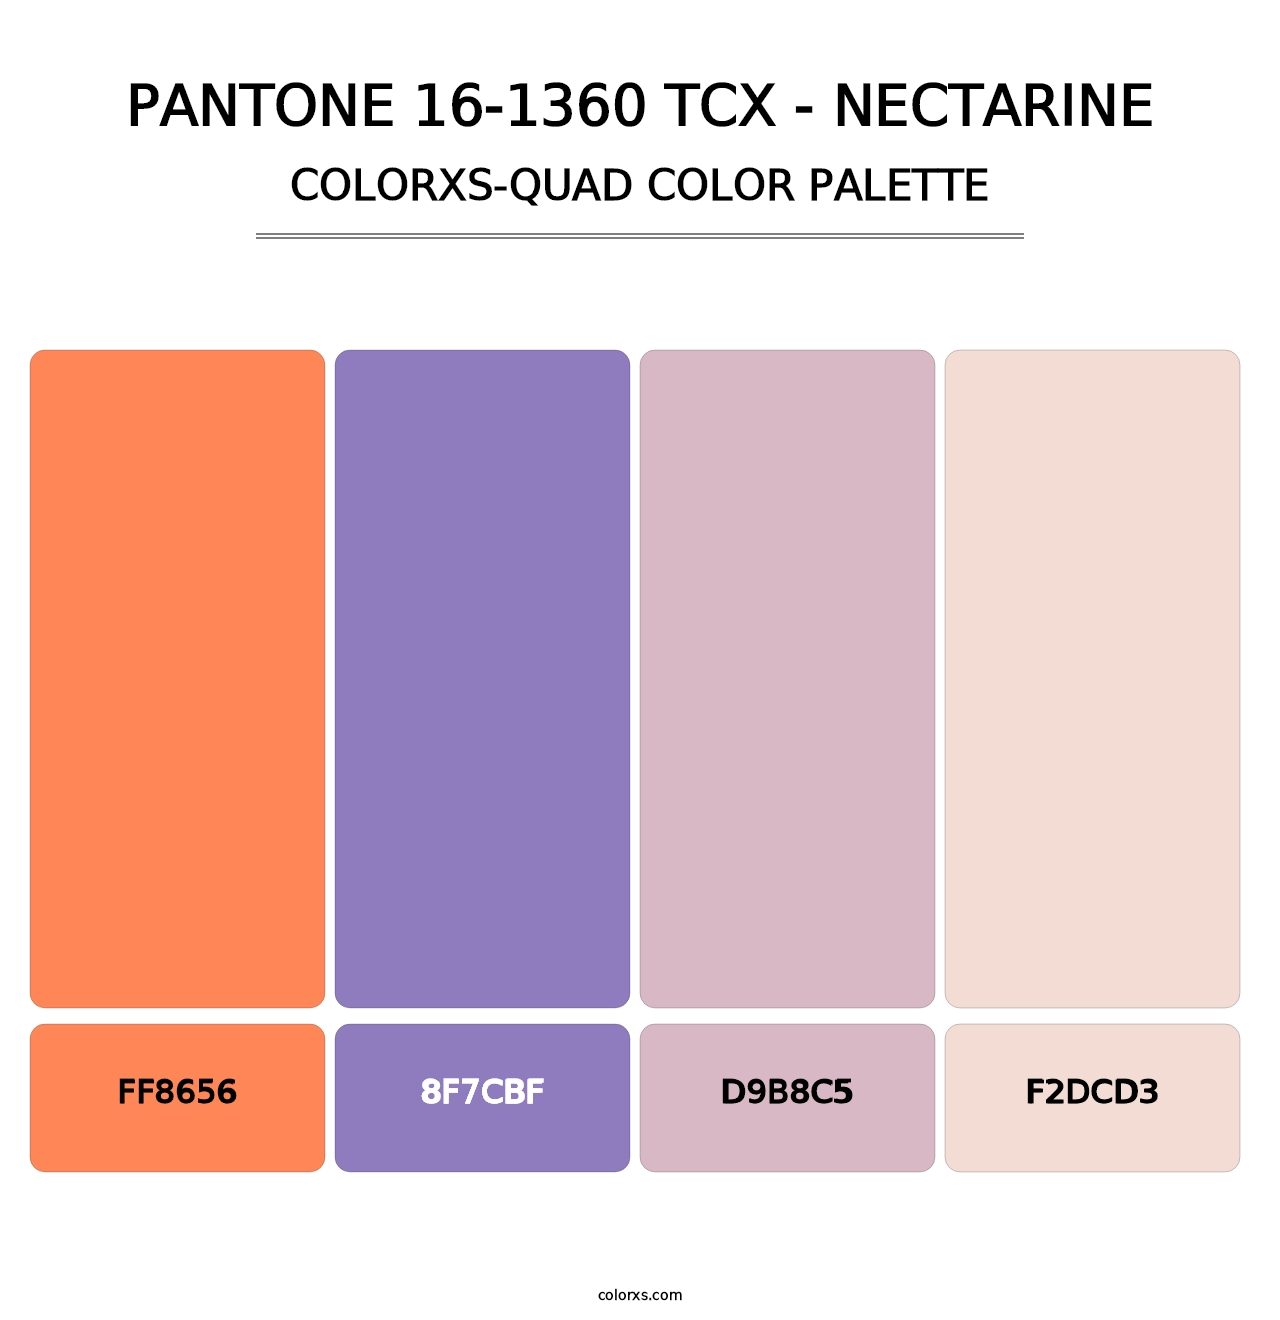 PANTONE 16-1360 TCX - Nectarine - Colorxs Quad Palette